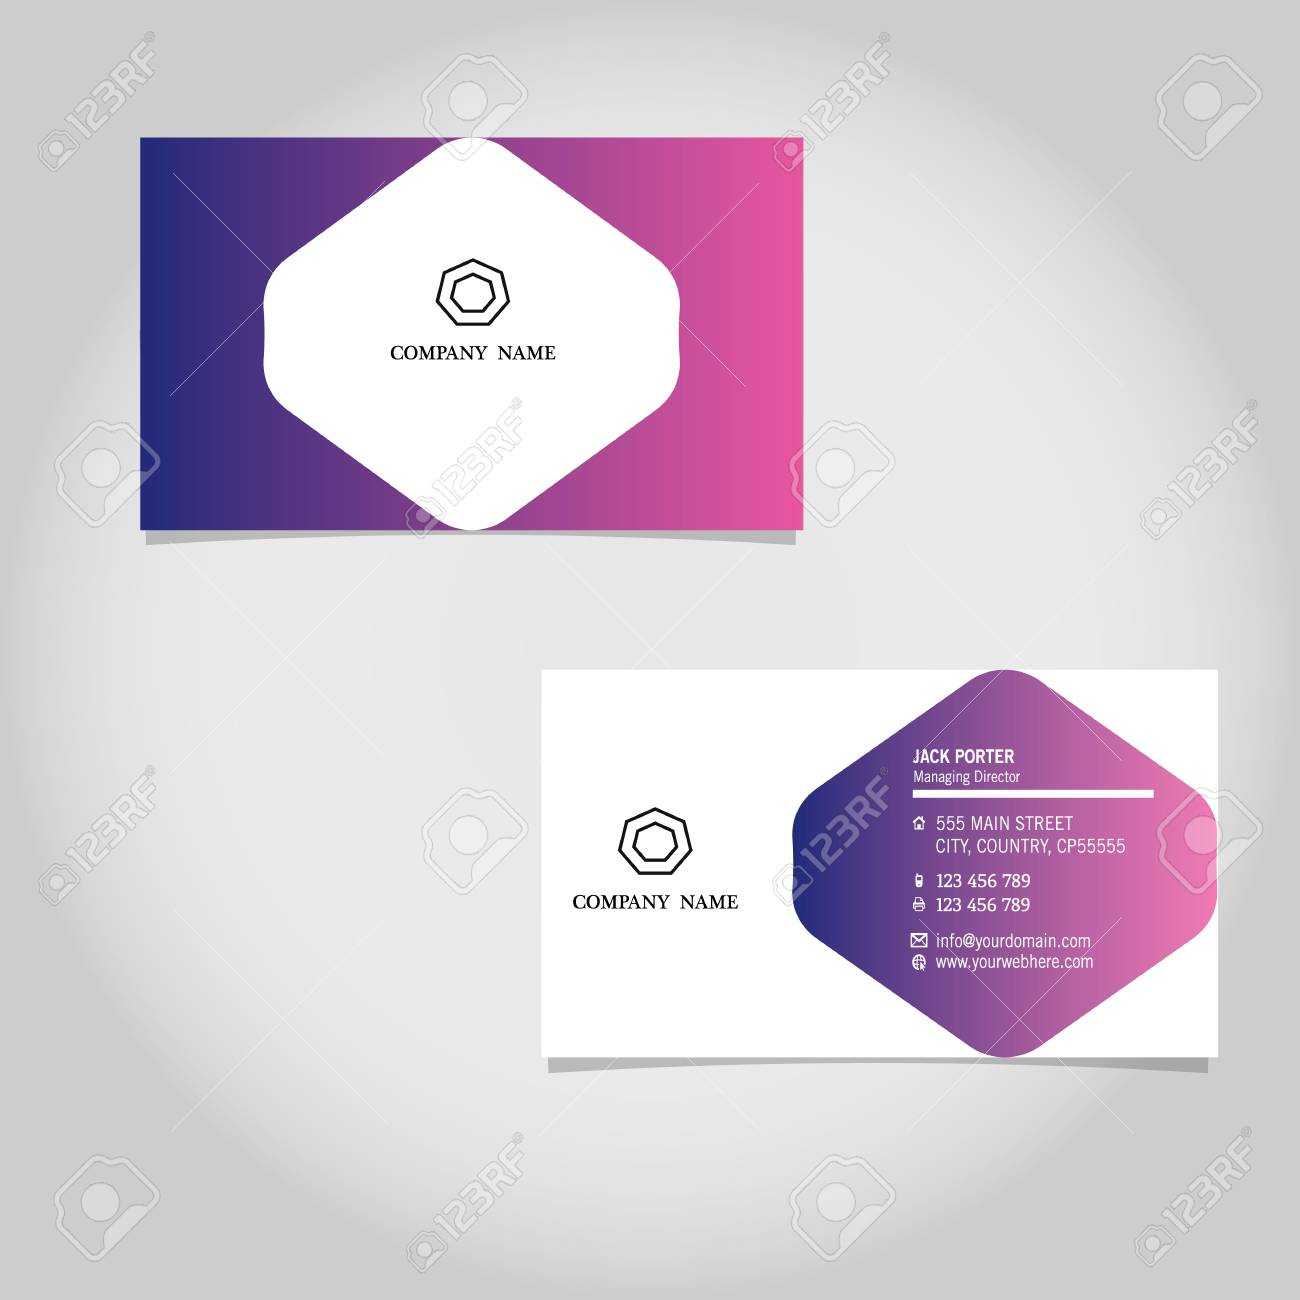 Vector Business Card Template Design Adobe Illustrator For Adobe Illustrator Card Template